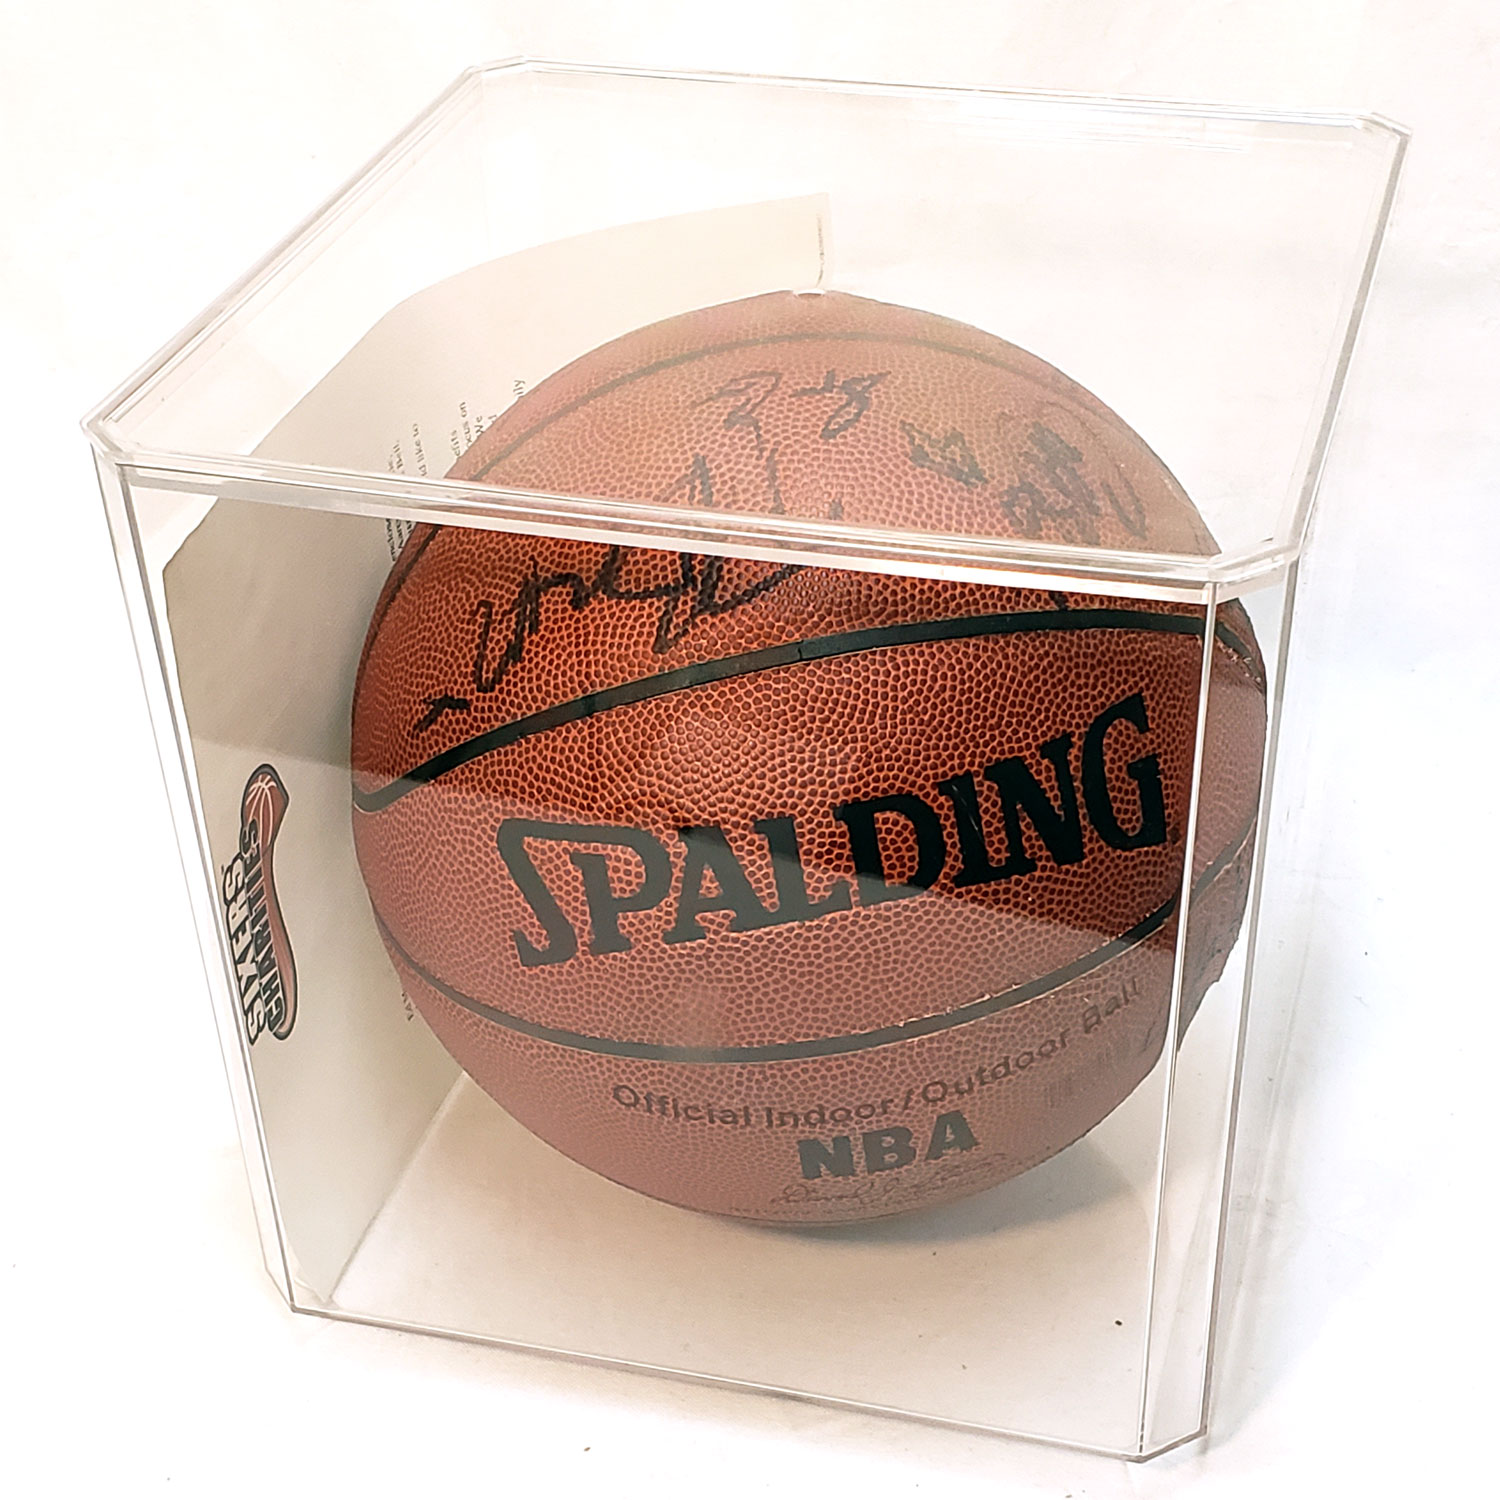 NBA Jersey Clearance Sale,Spalding NBA Replica Basketball,Kyle